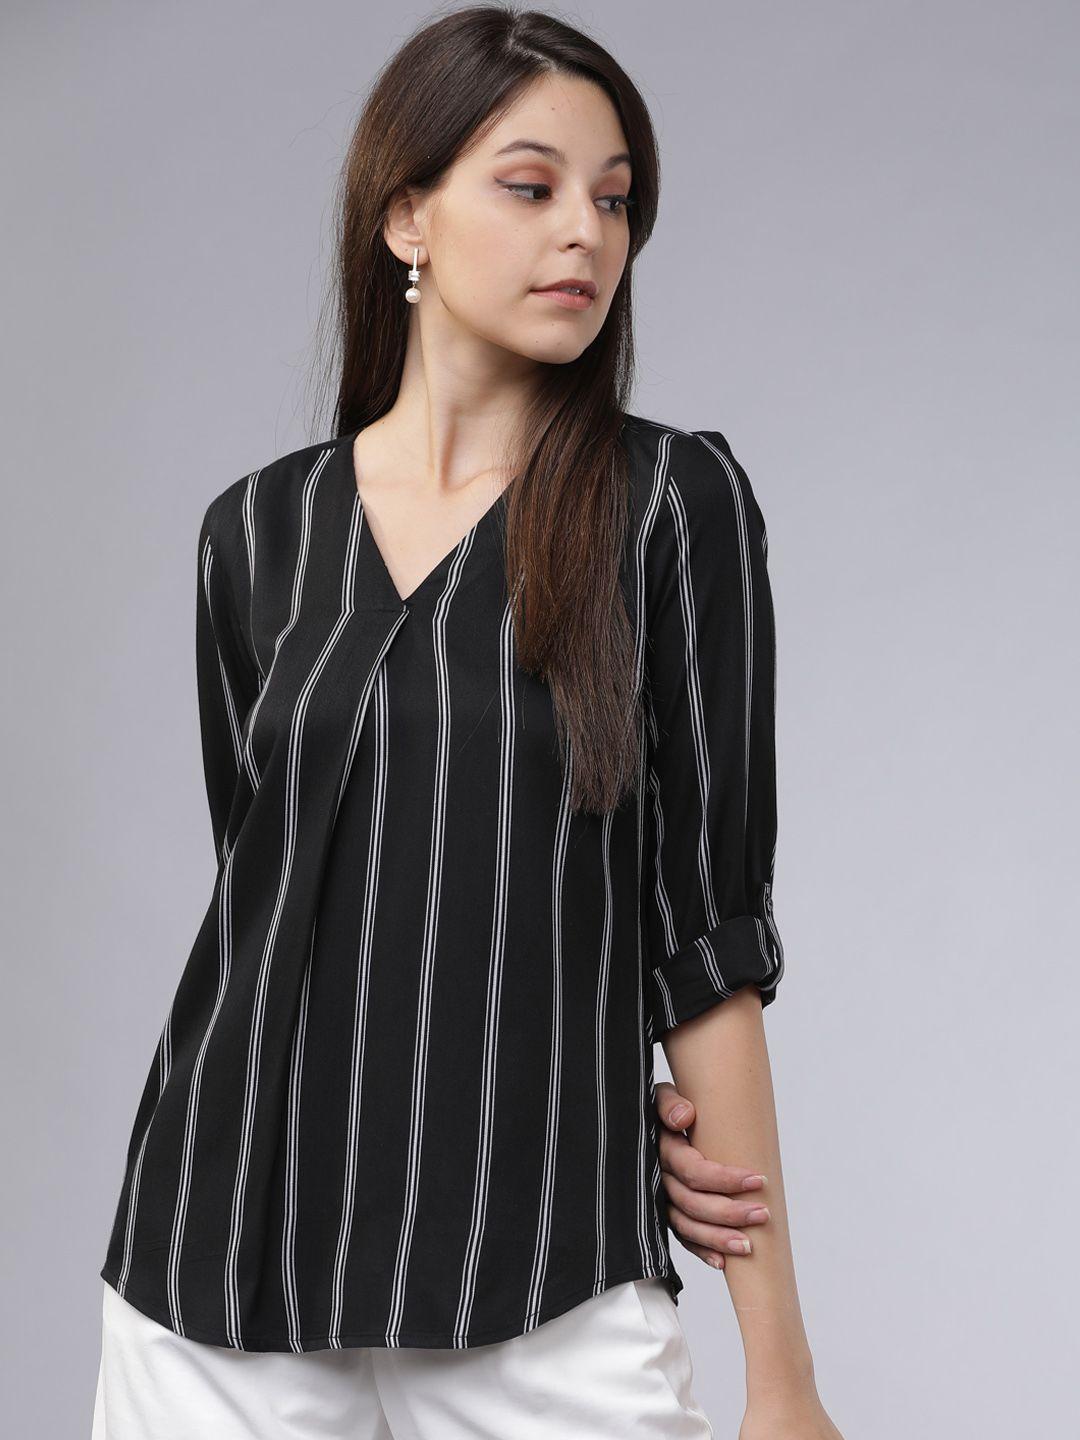 tokyo talkies women black striped top